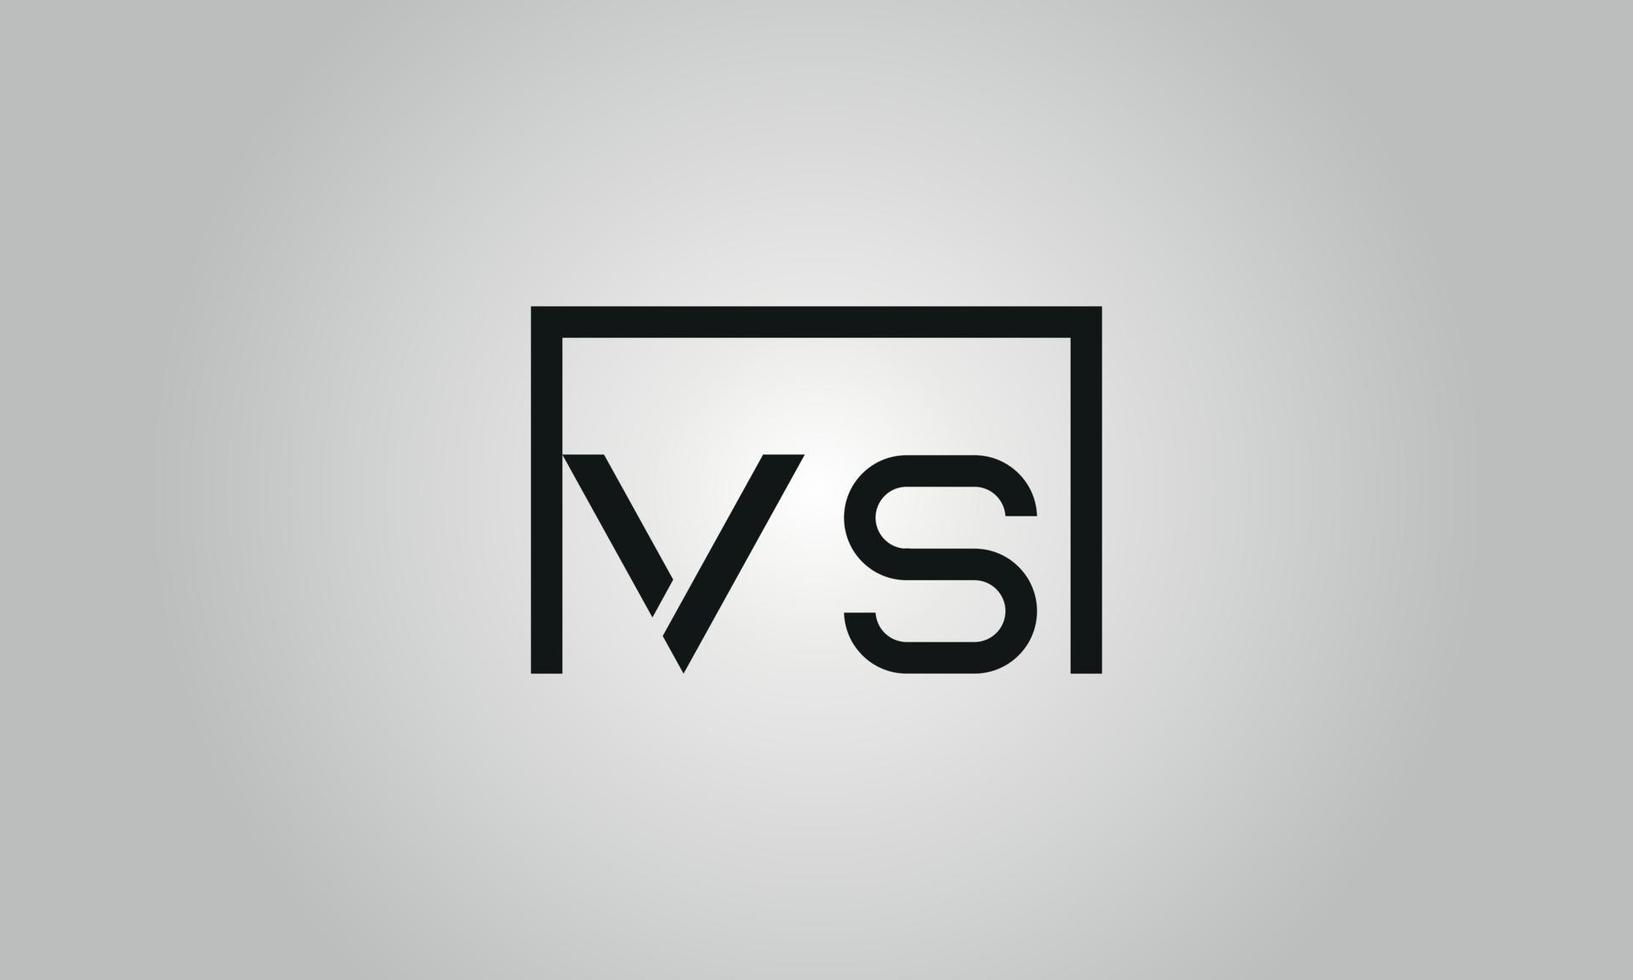 Letter VS logo design. VS logo with square shape in black colors vector free vector template.